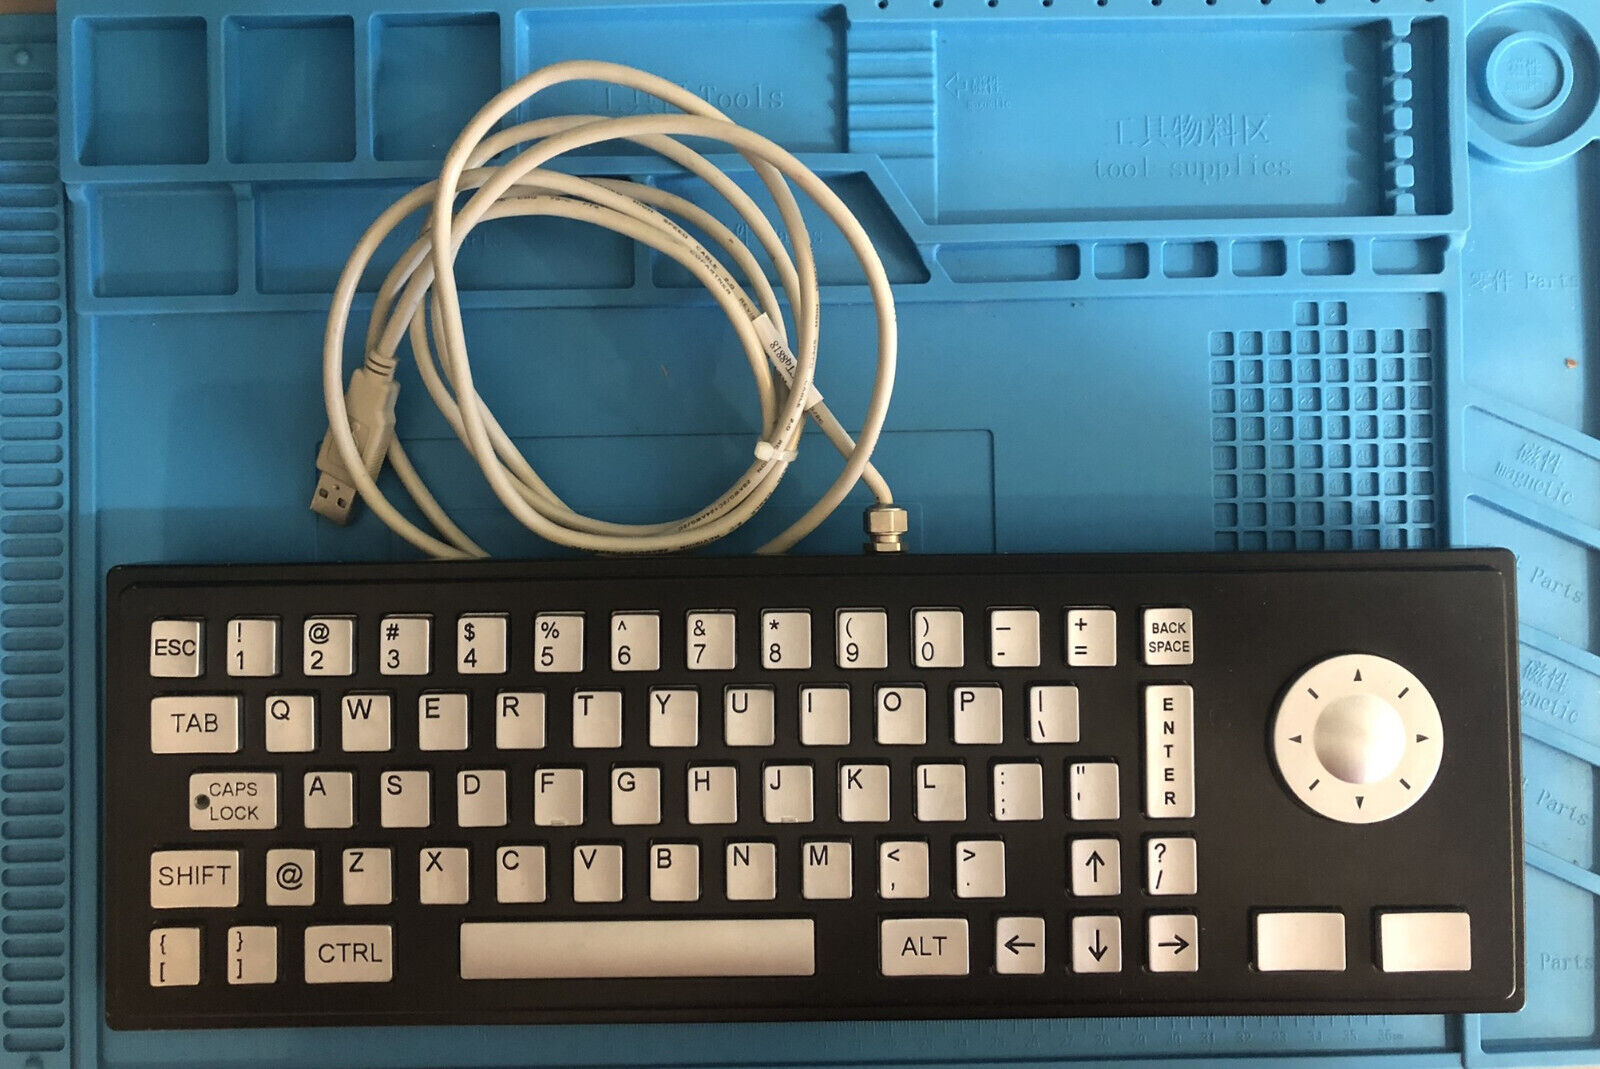 NEW OIT QVP01T Industrial Kiosk Custom Rugged Keyboard & Mouse | USB